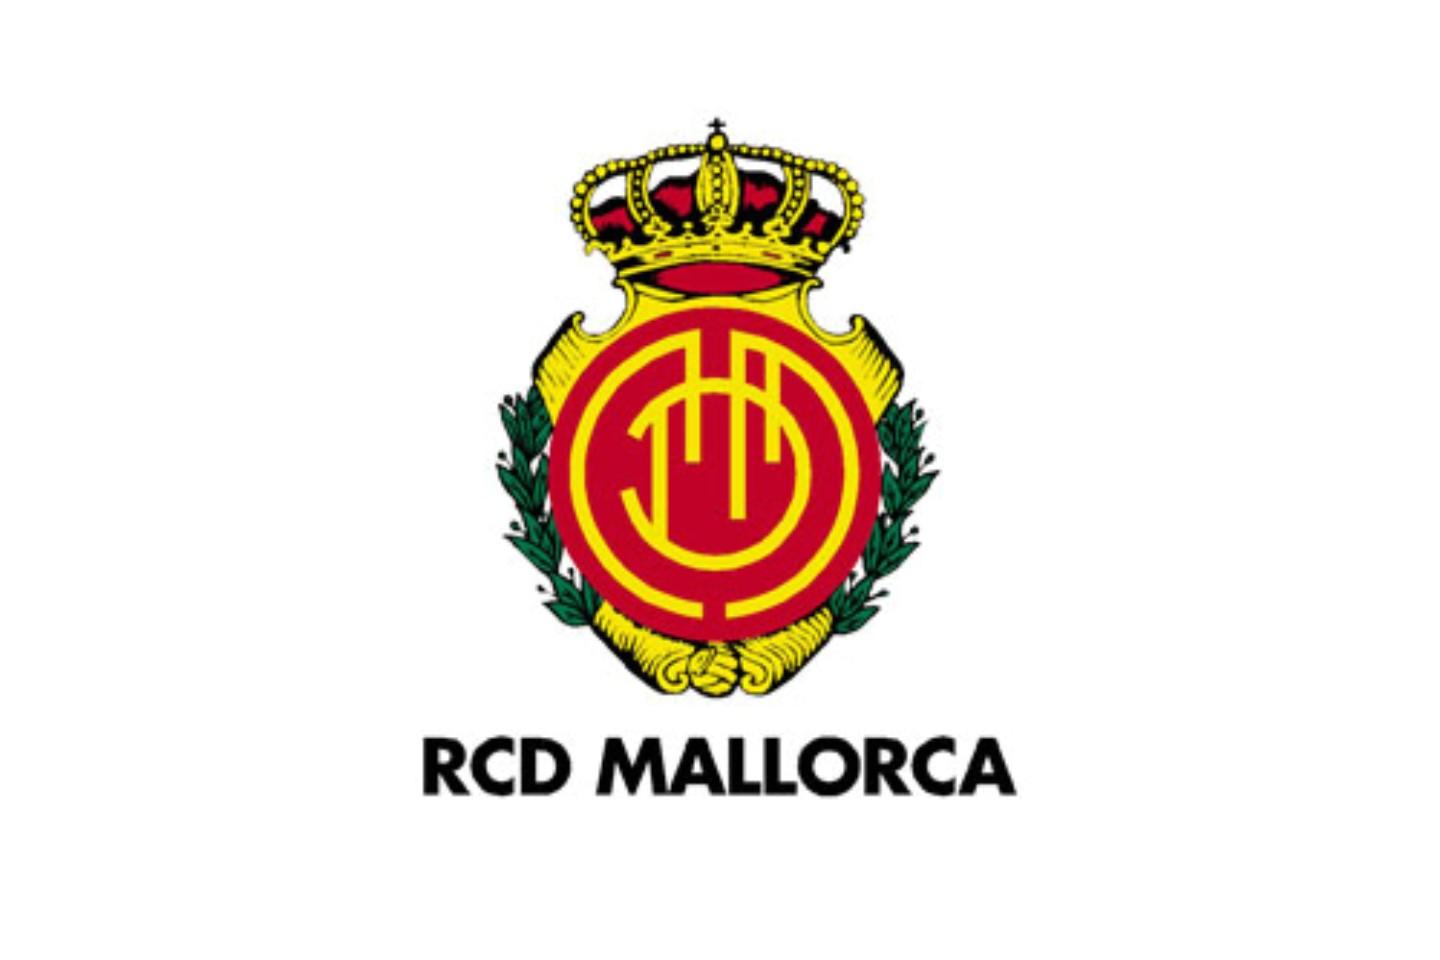 RCD Mallorca till La Liga